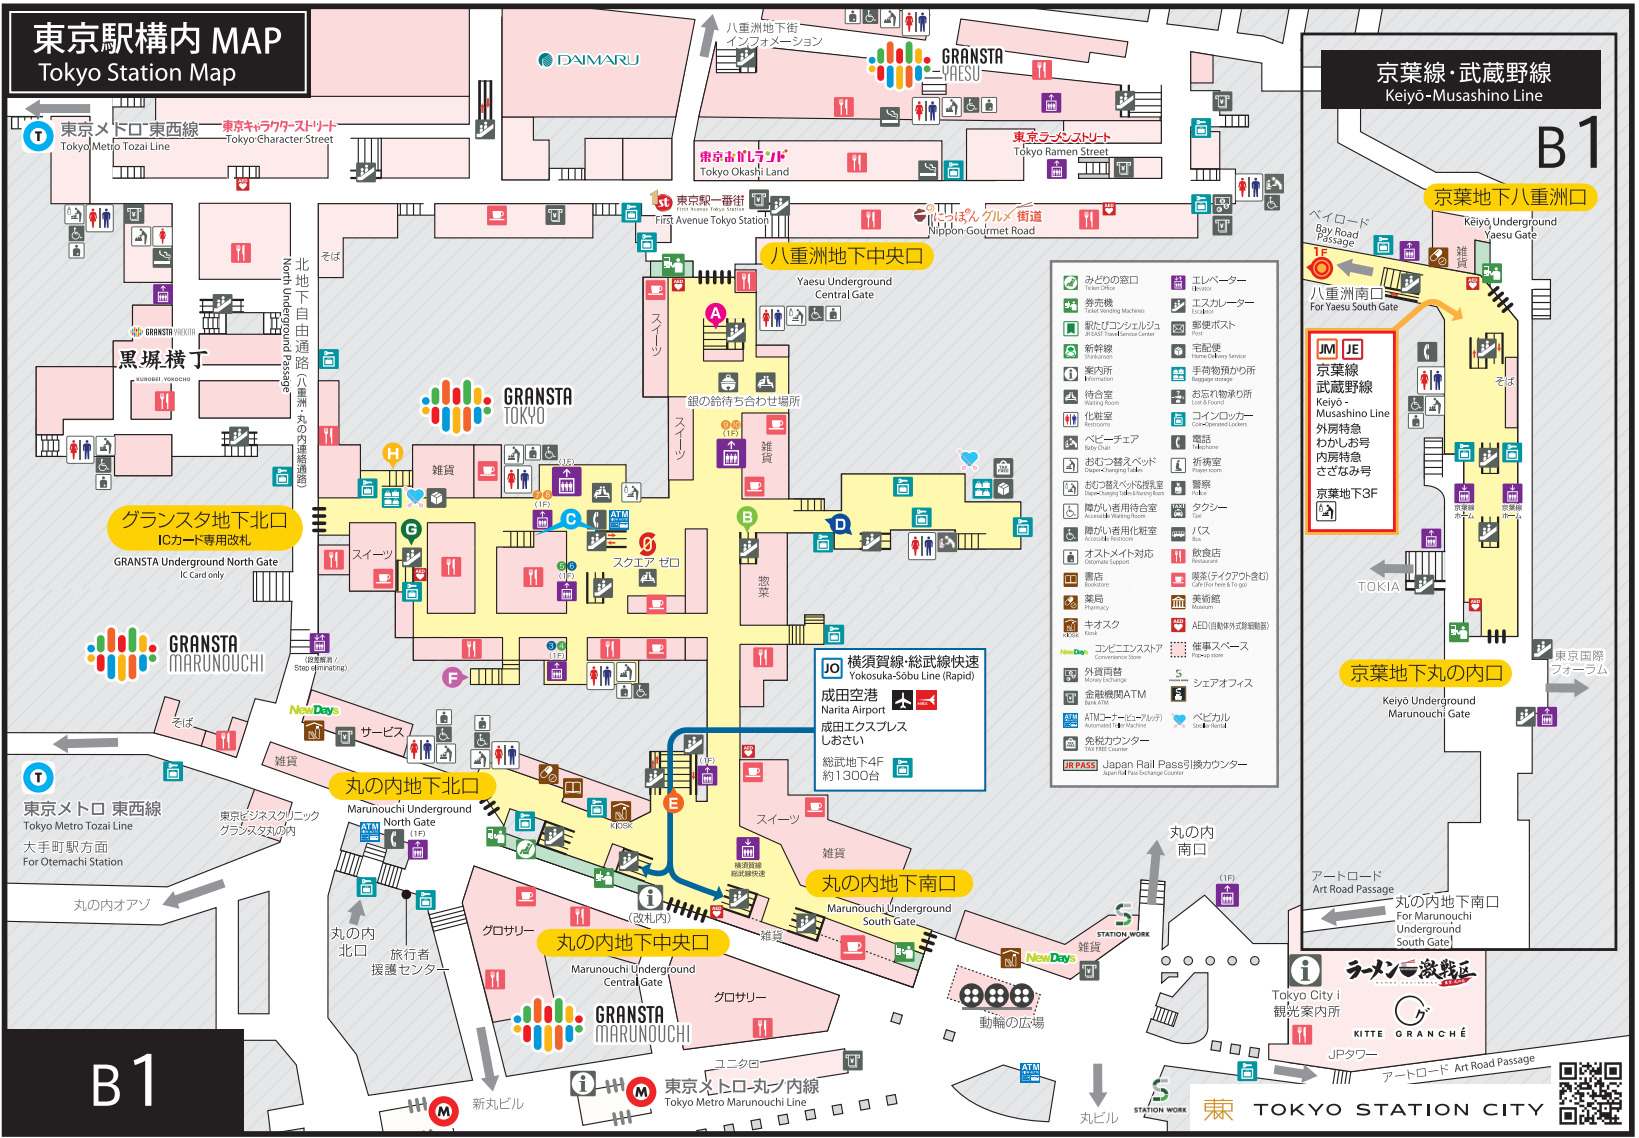 Tokyo Station Map B1